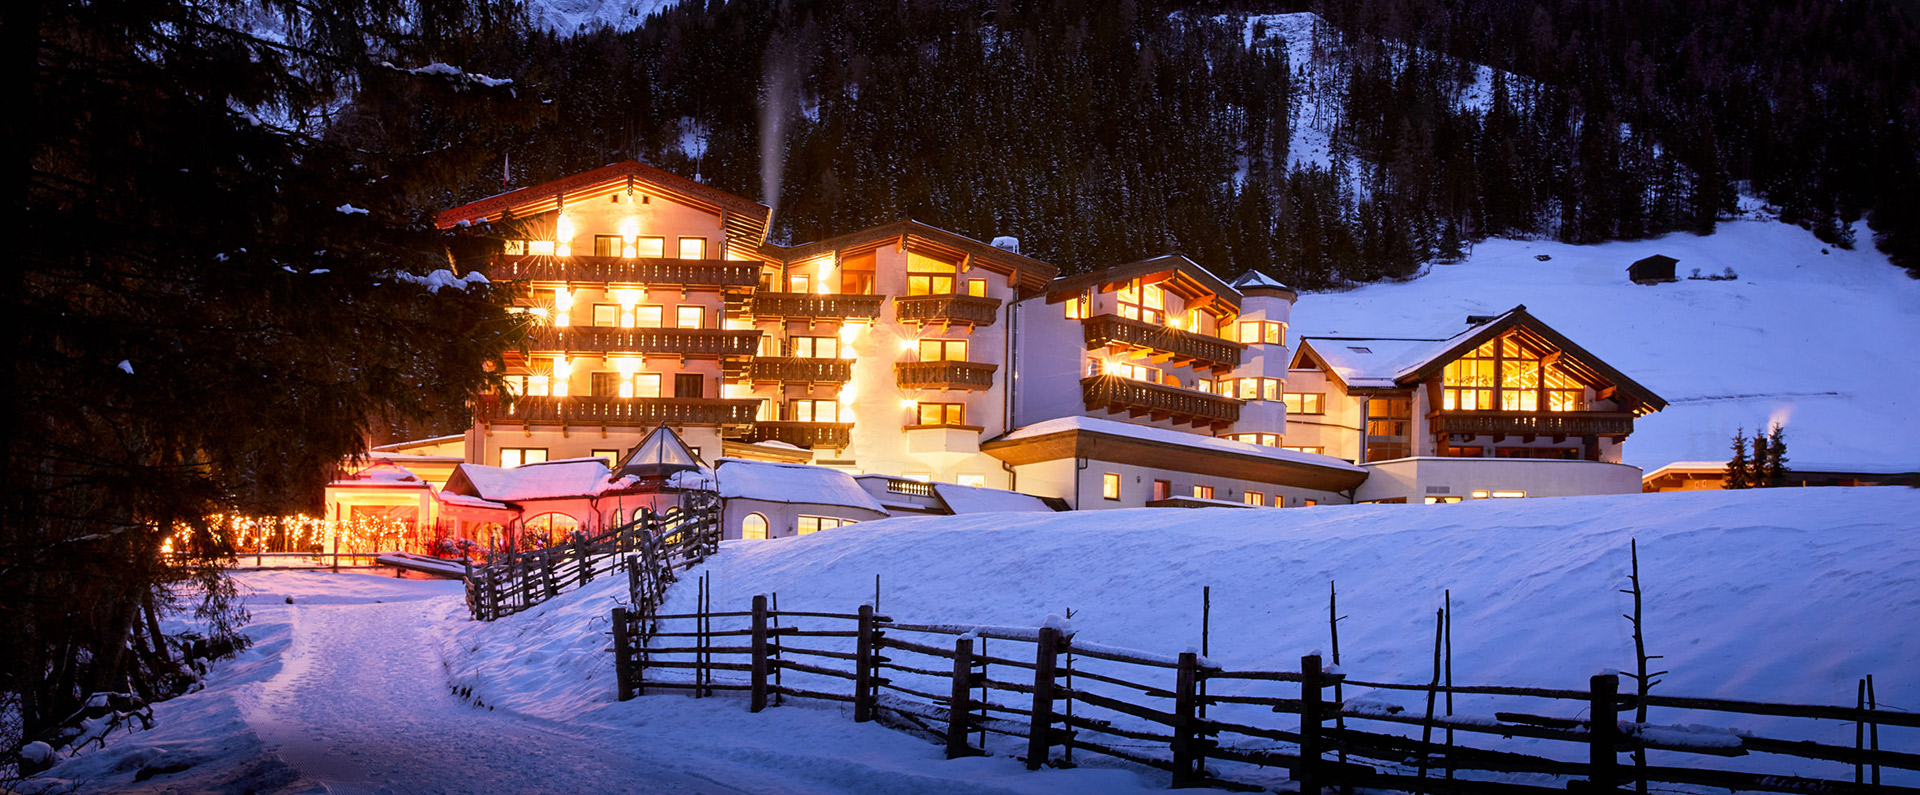 Hotel Adler Inn Winterurlaub Wellnesshotel Zillertal Tirol